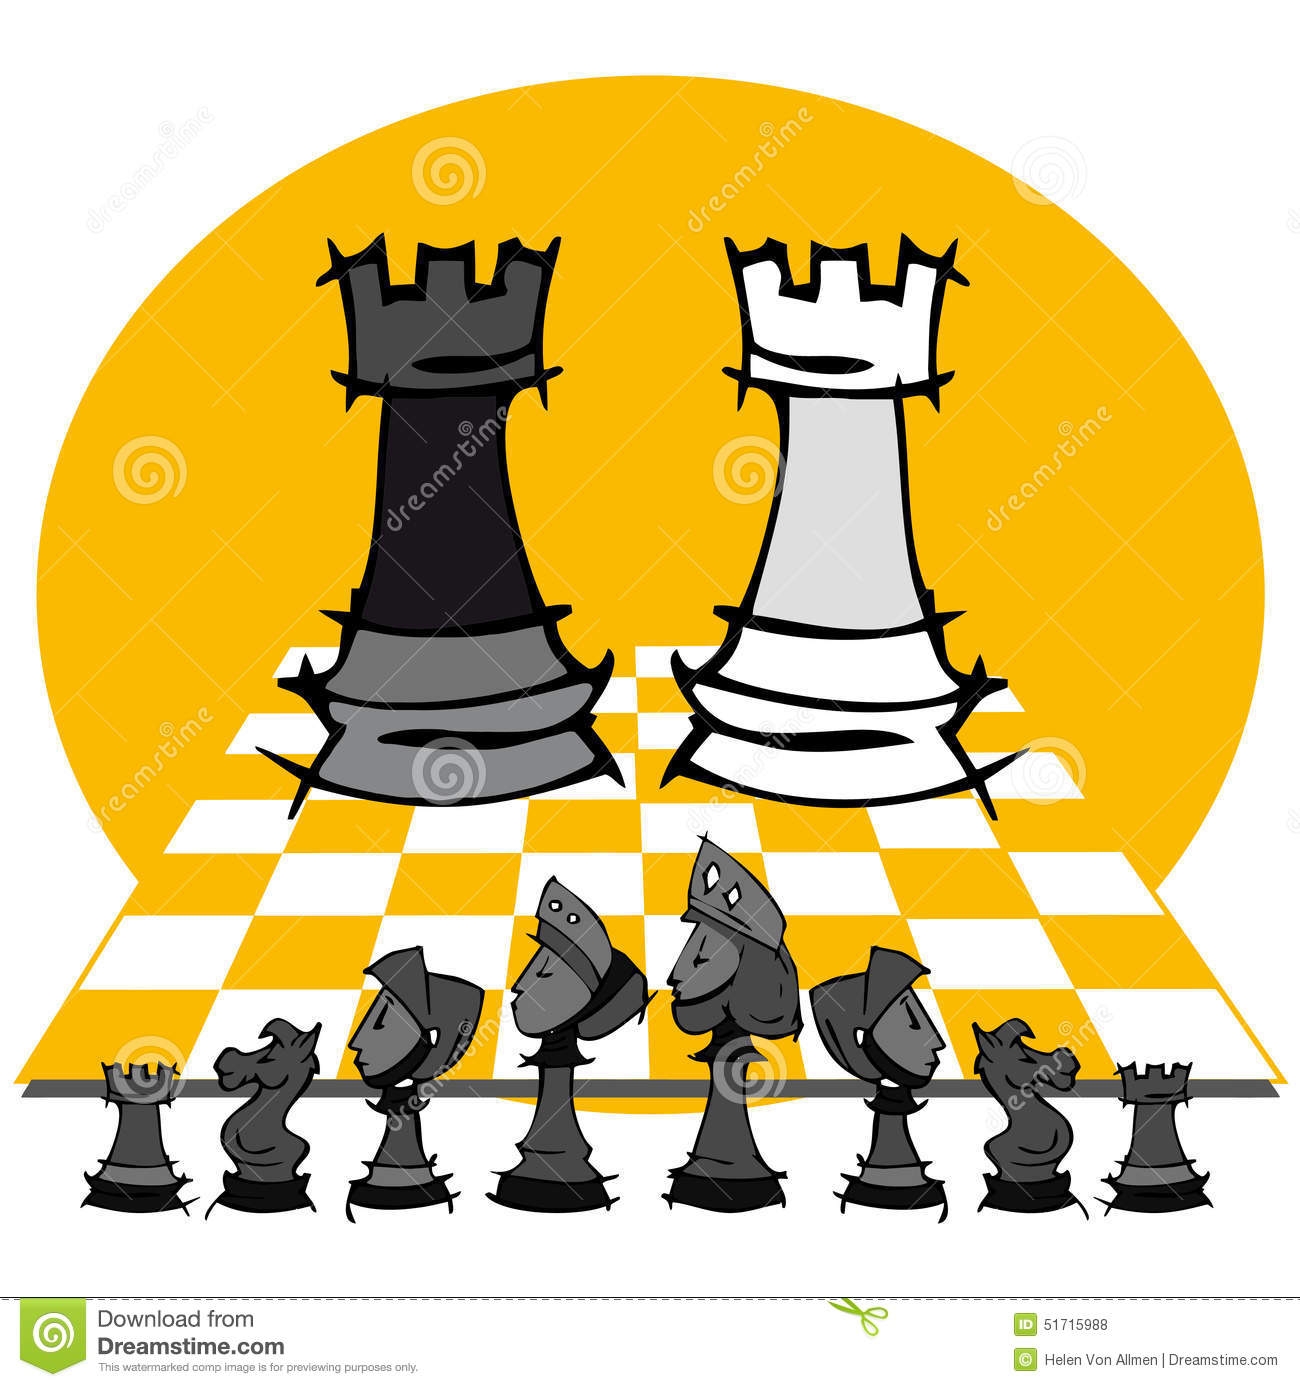 Ладья в шахматах для детей